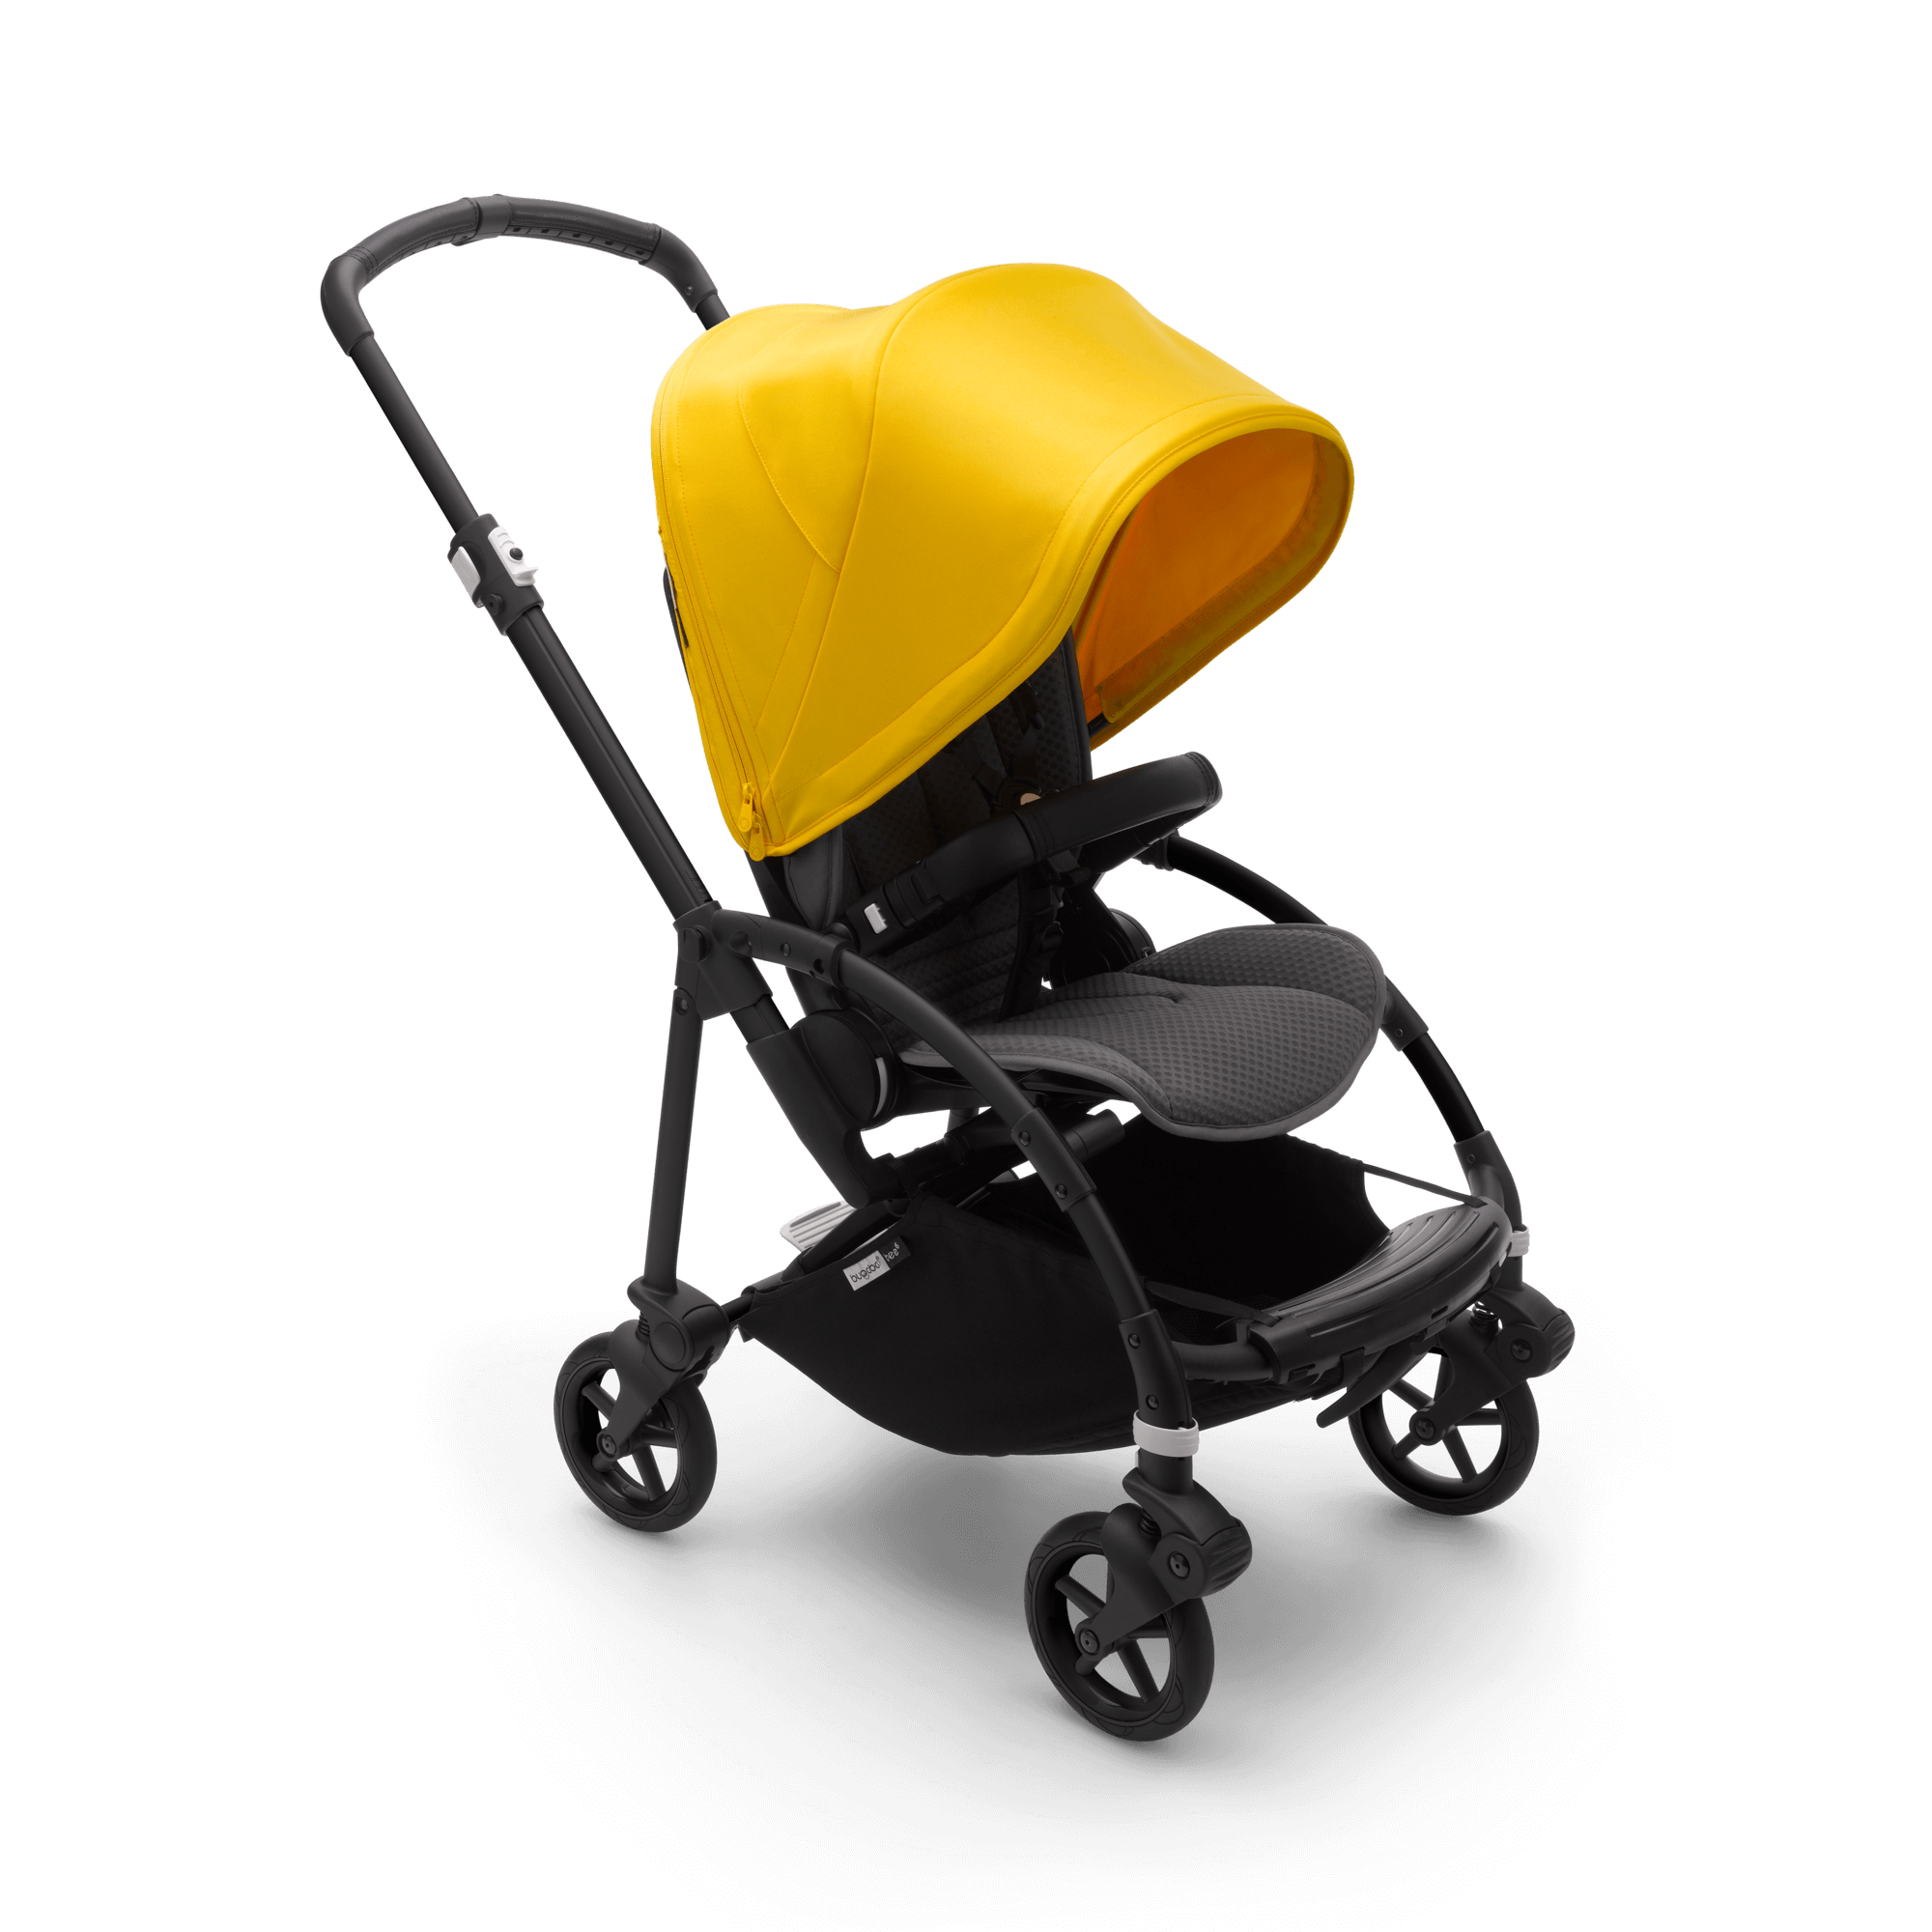 Bugaboo Bee 6 seat stroller lemon yellow sun canopy grey mélange fabrics black base